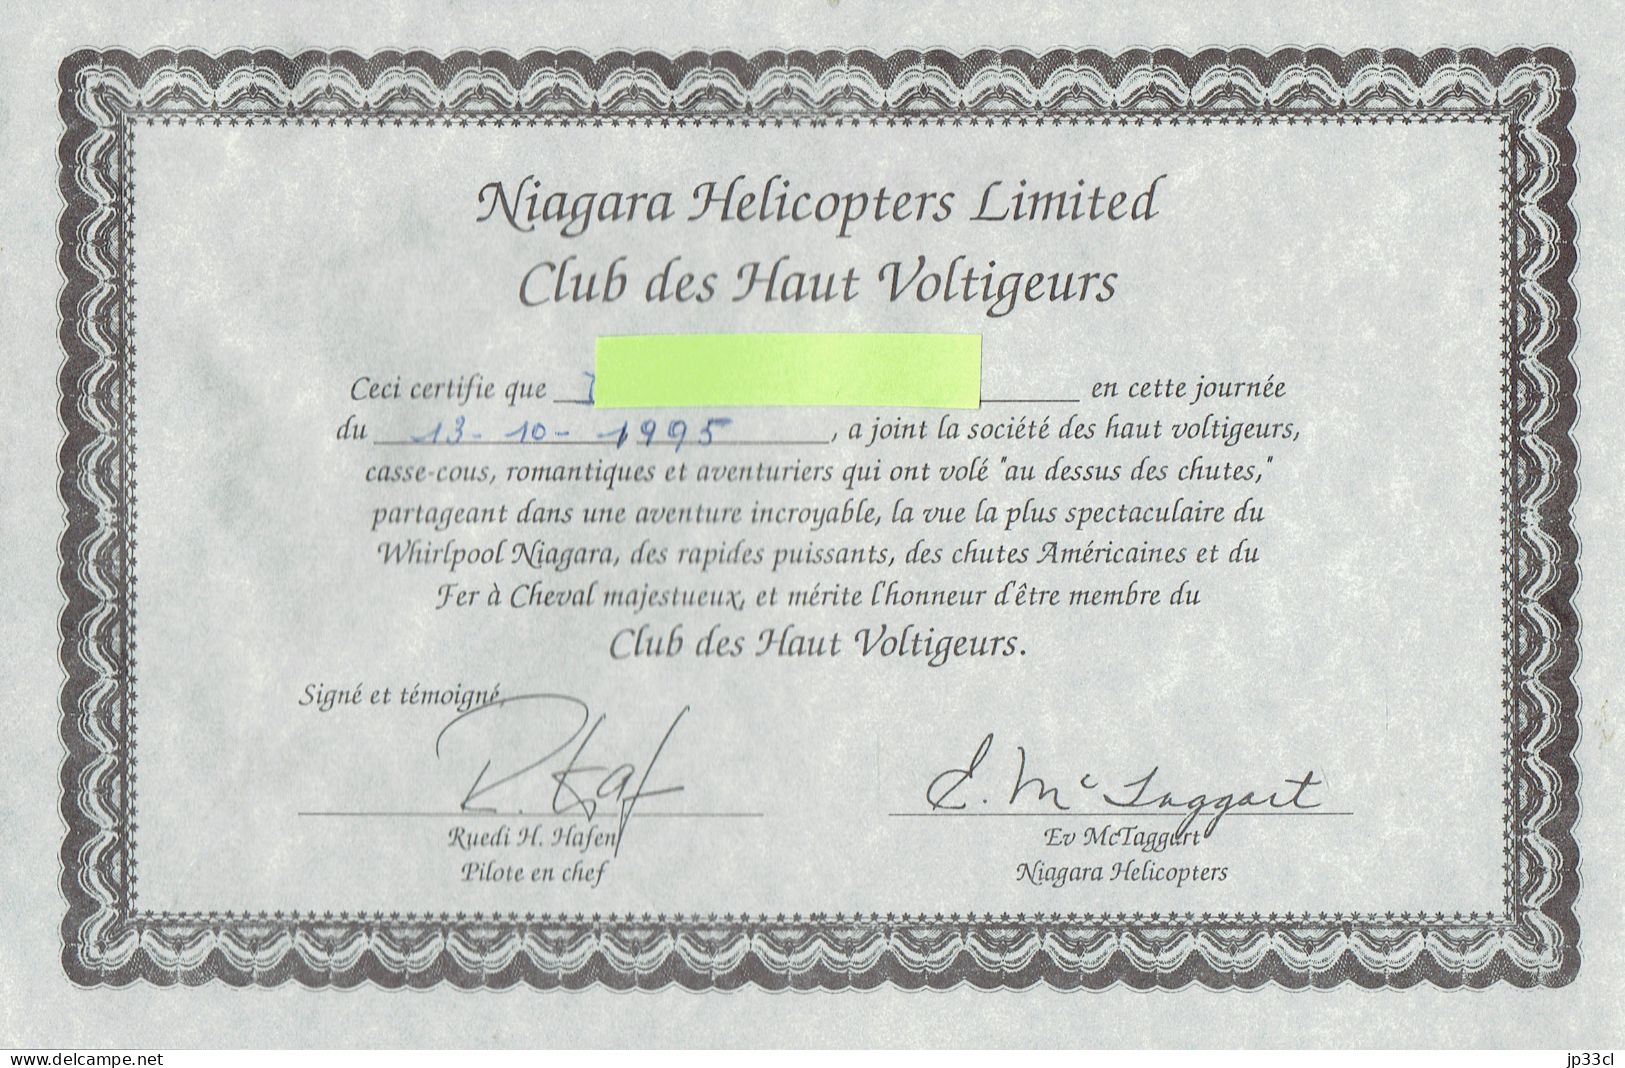 Les Chutes Du Niagara Vues D'hélicoptère (helicopter) Ticket D'embarquement + 9 Photos Prises à Bord + Diplôme (1995) - Amerika